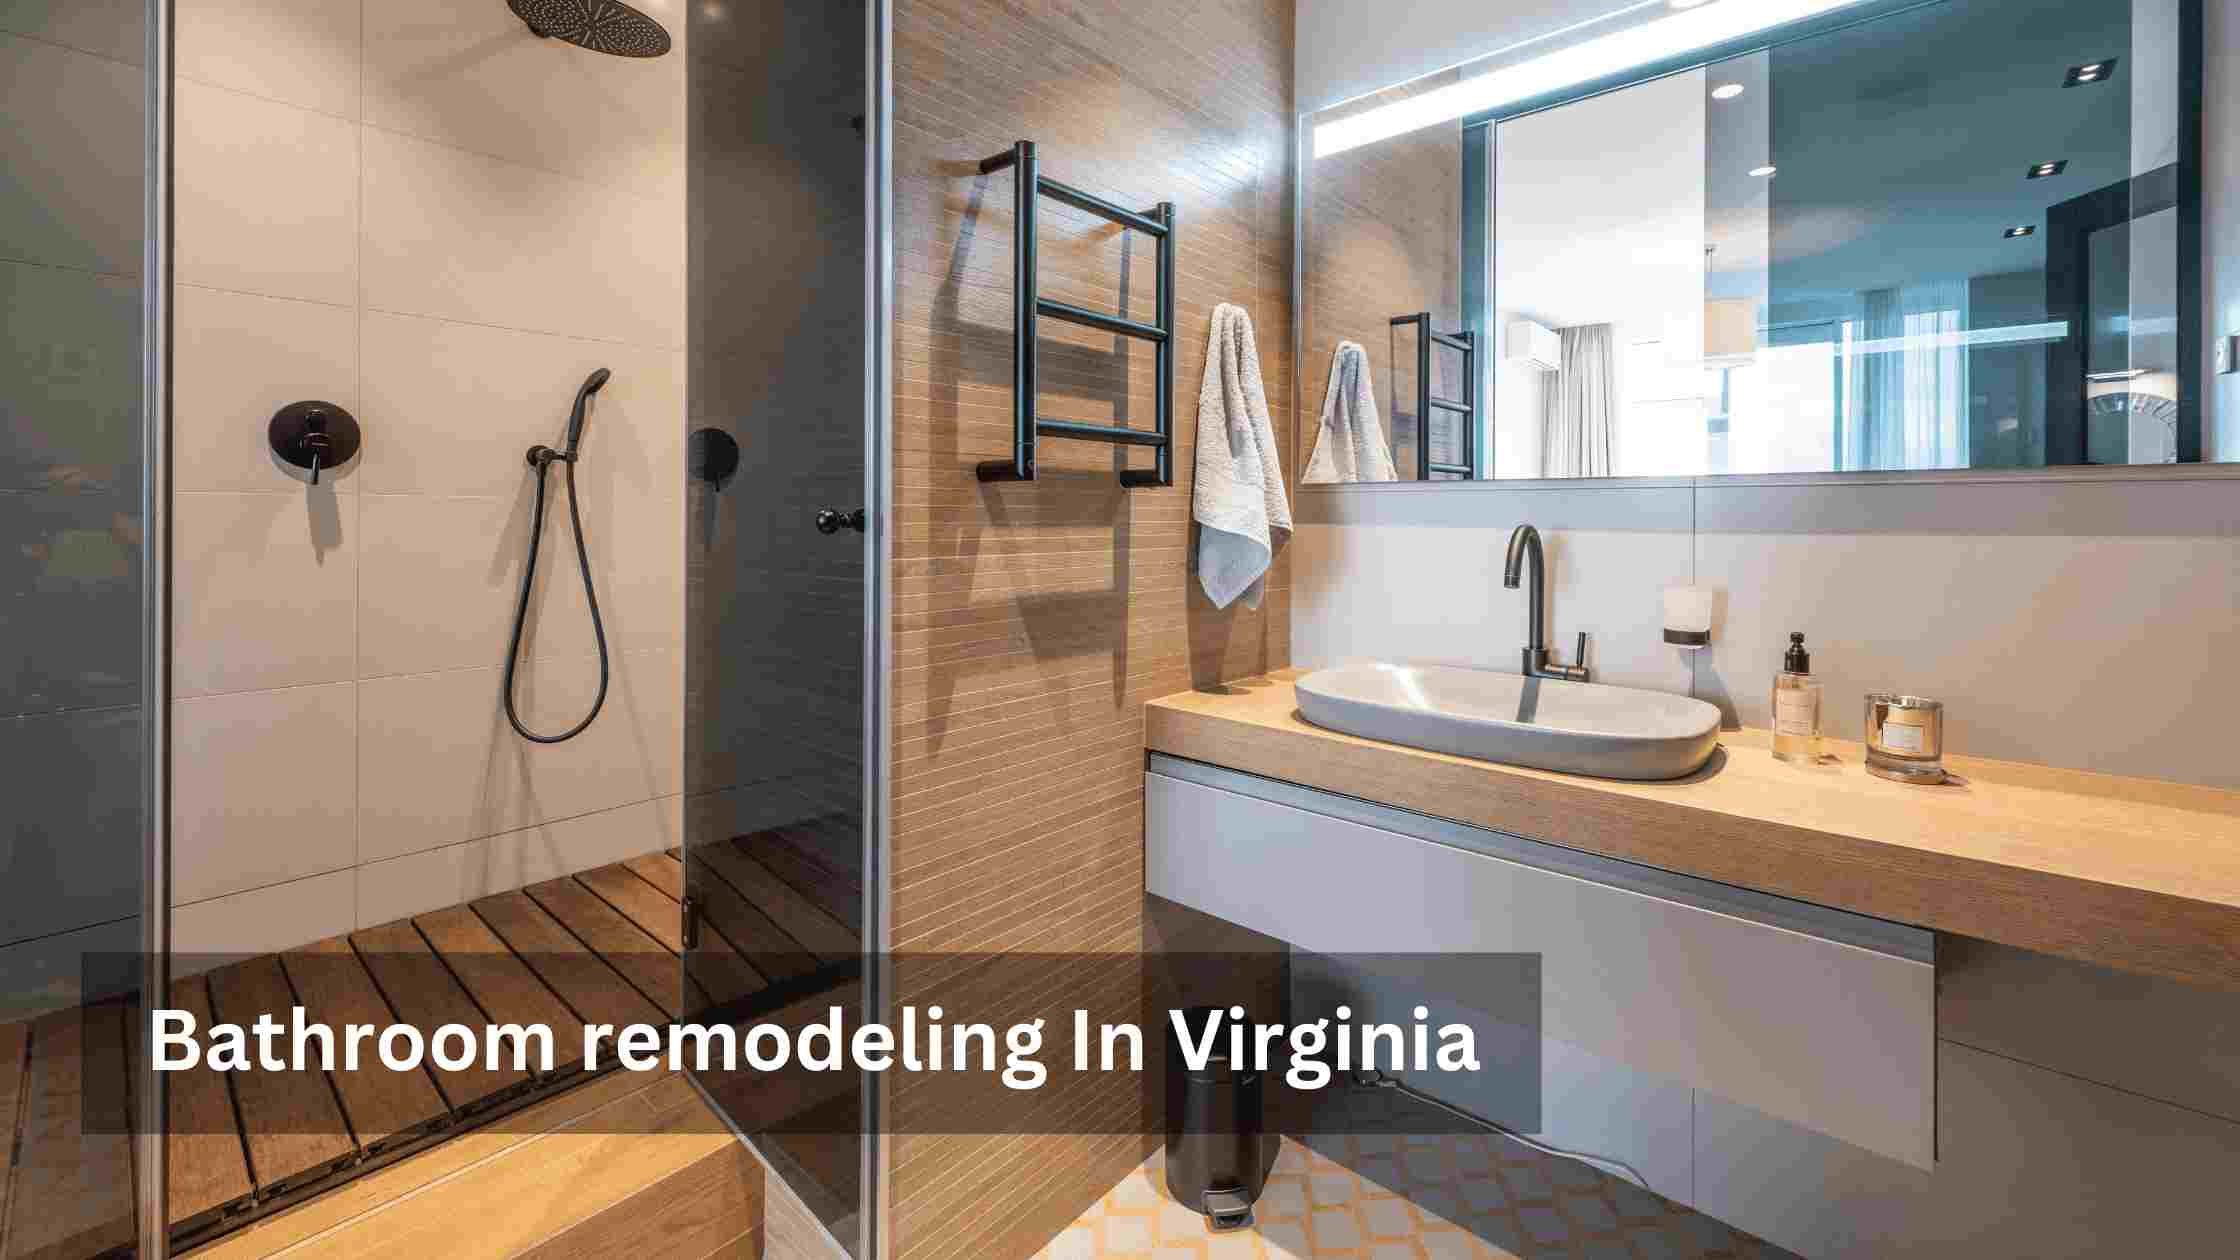 Virginia’s Top Trends in Bathroom Remodeling: What’s Hot?